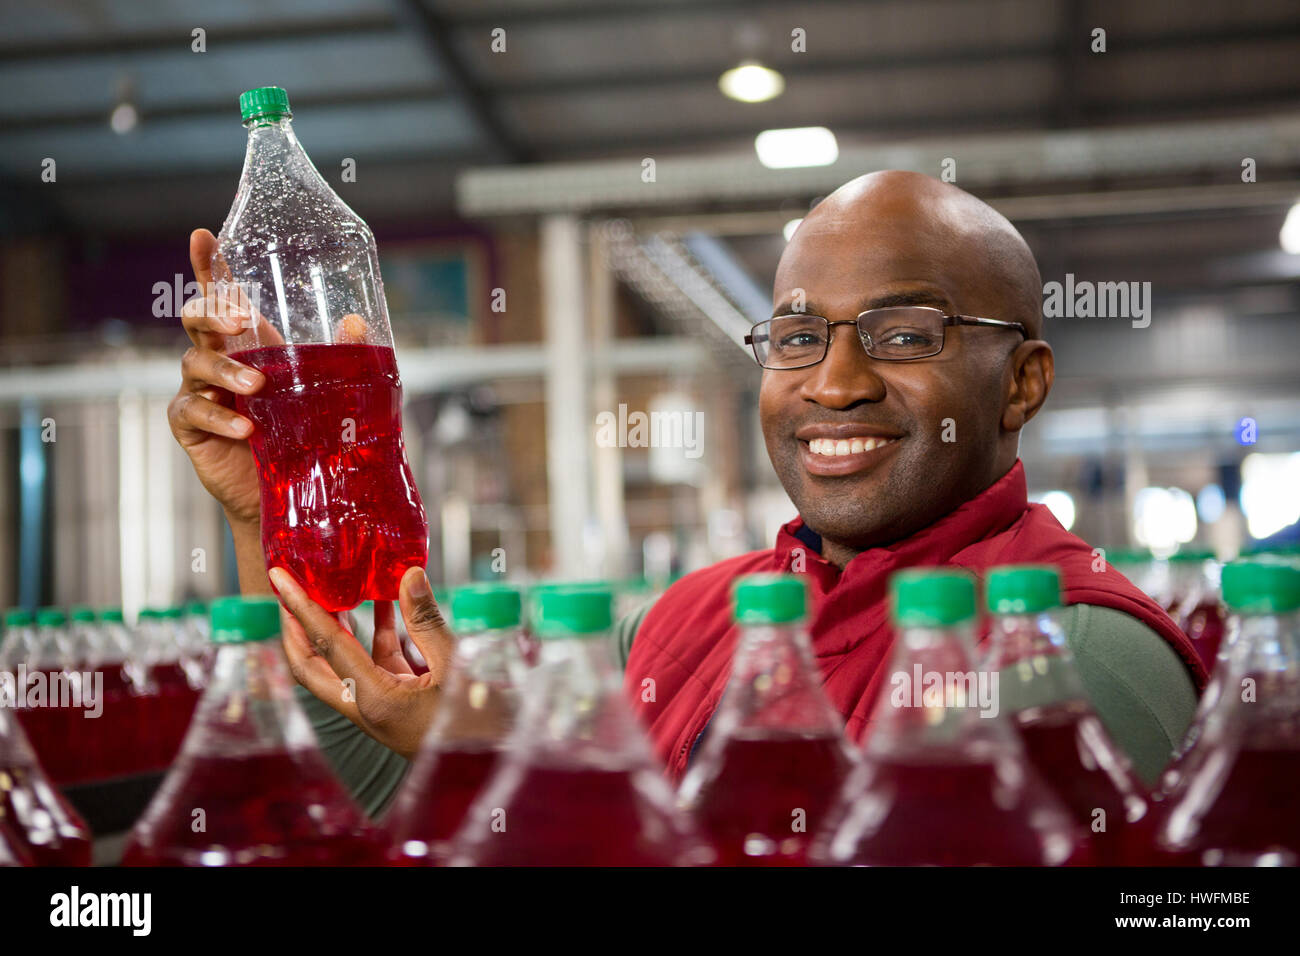 Portrait of smiling male worker showing juice bottle in factory Stock Photo